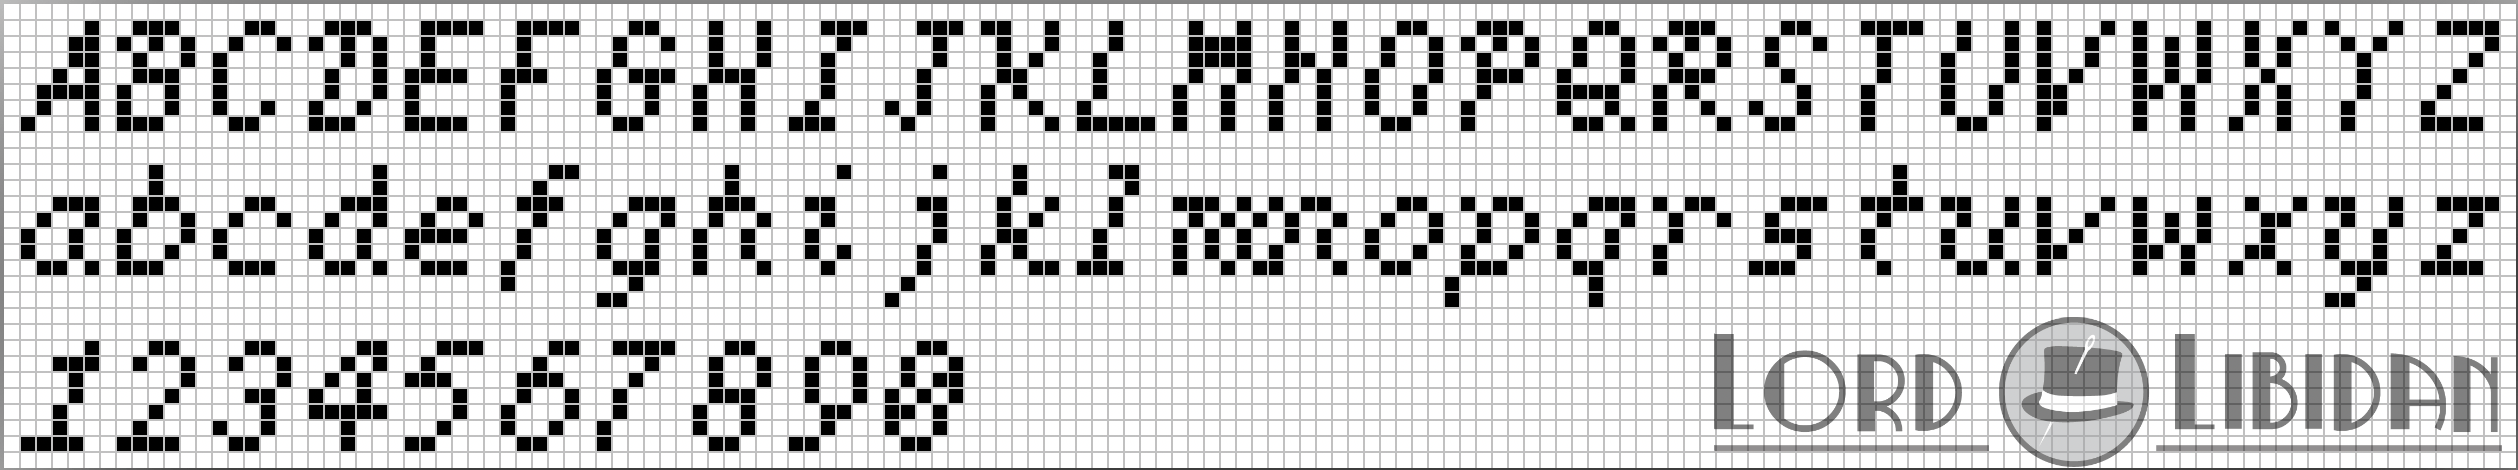 Slight Italic Cross Stitch Alphabet Pattern Free Download by Lord Libidan